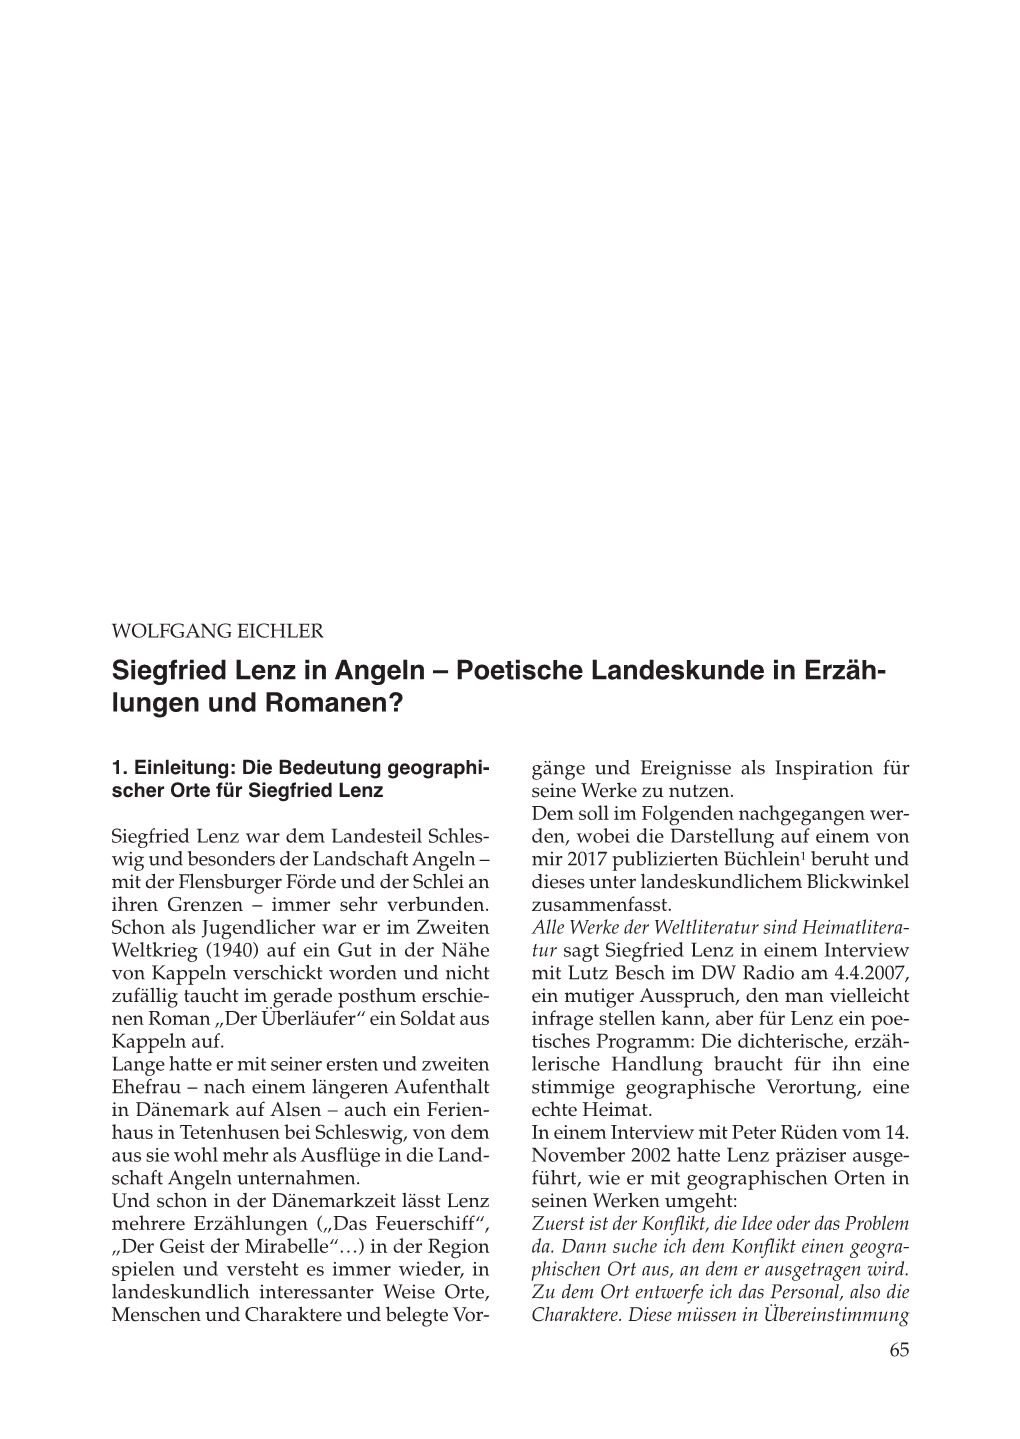 Eichler, Wolfgang: Siegfried Lenz in Angeln